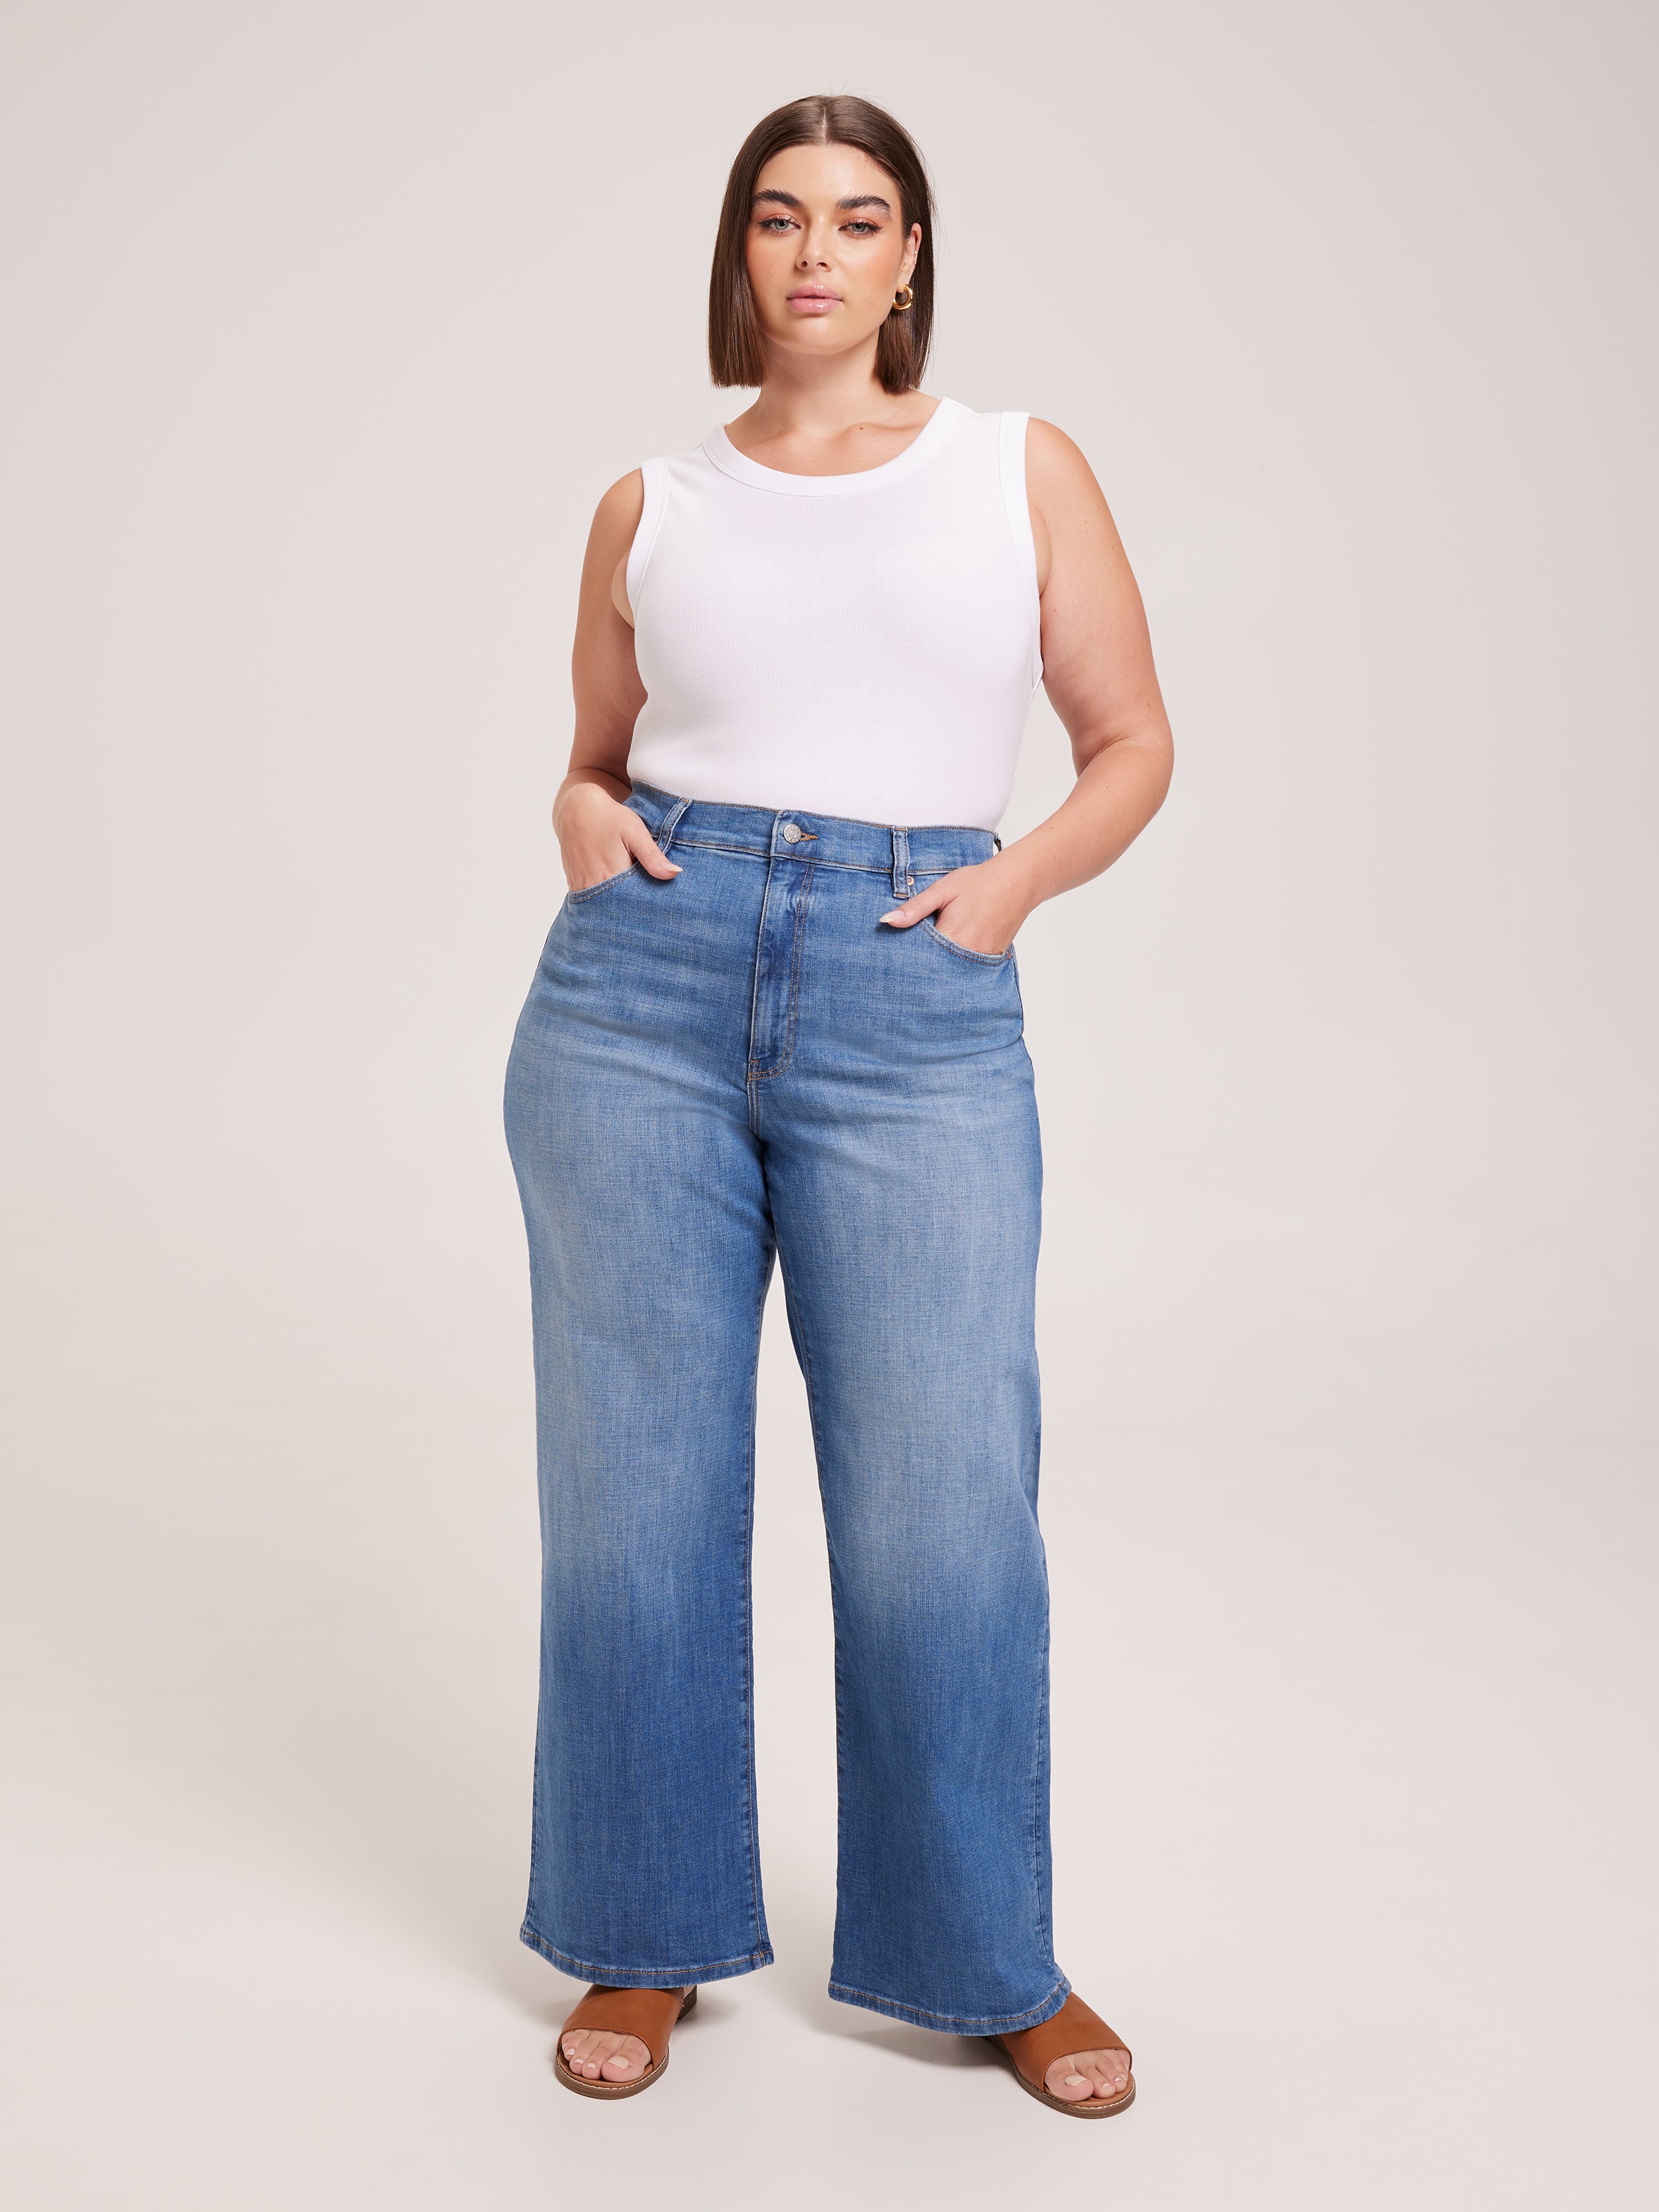 Just Jeans Official Site  Womens, Mens & Kids Branded Denim